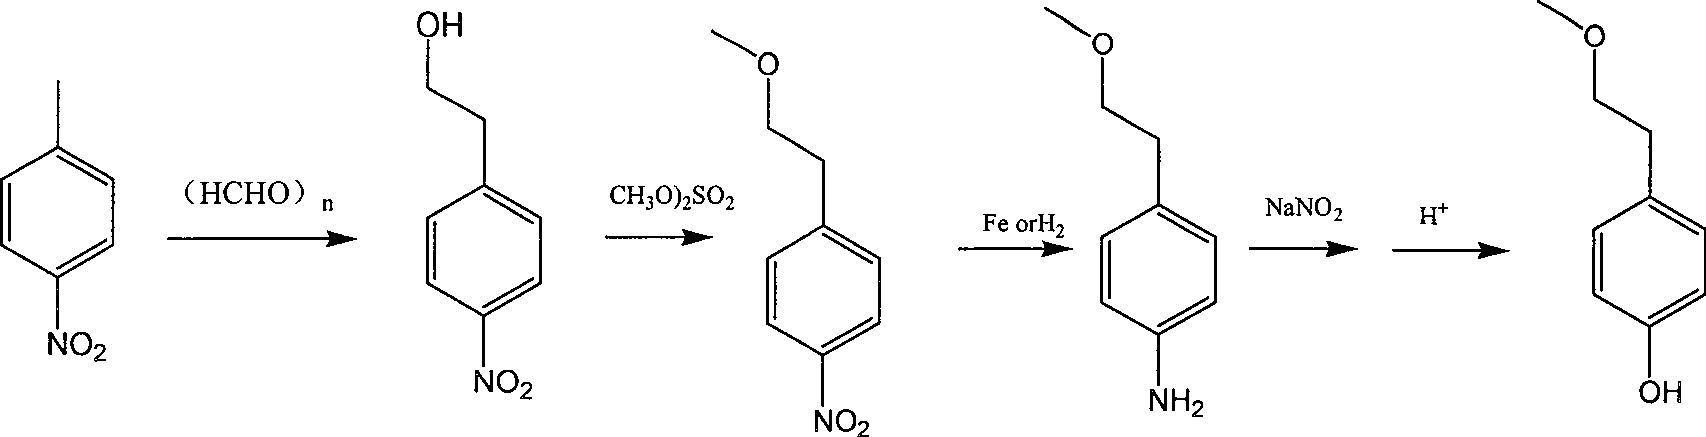 Para-(2-methoxyl) ethylphenol synthesis method